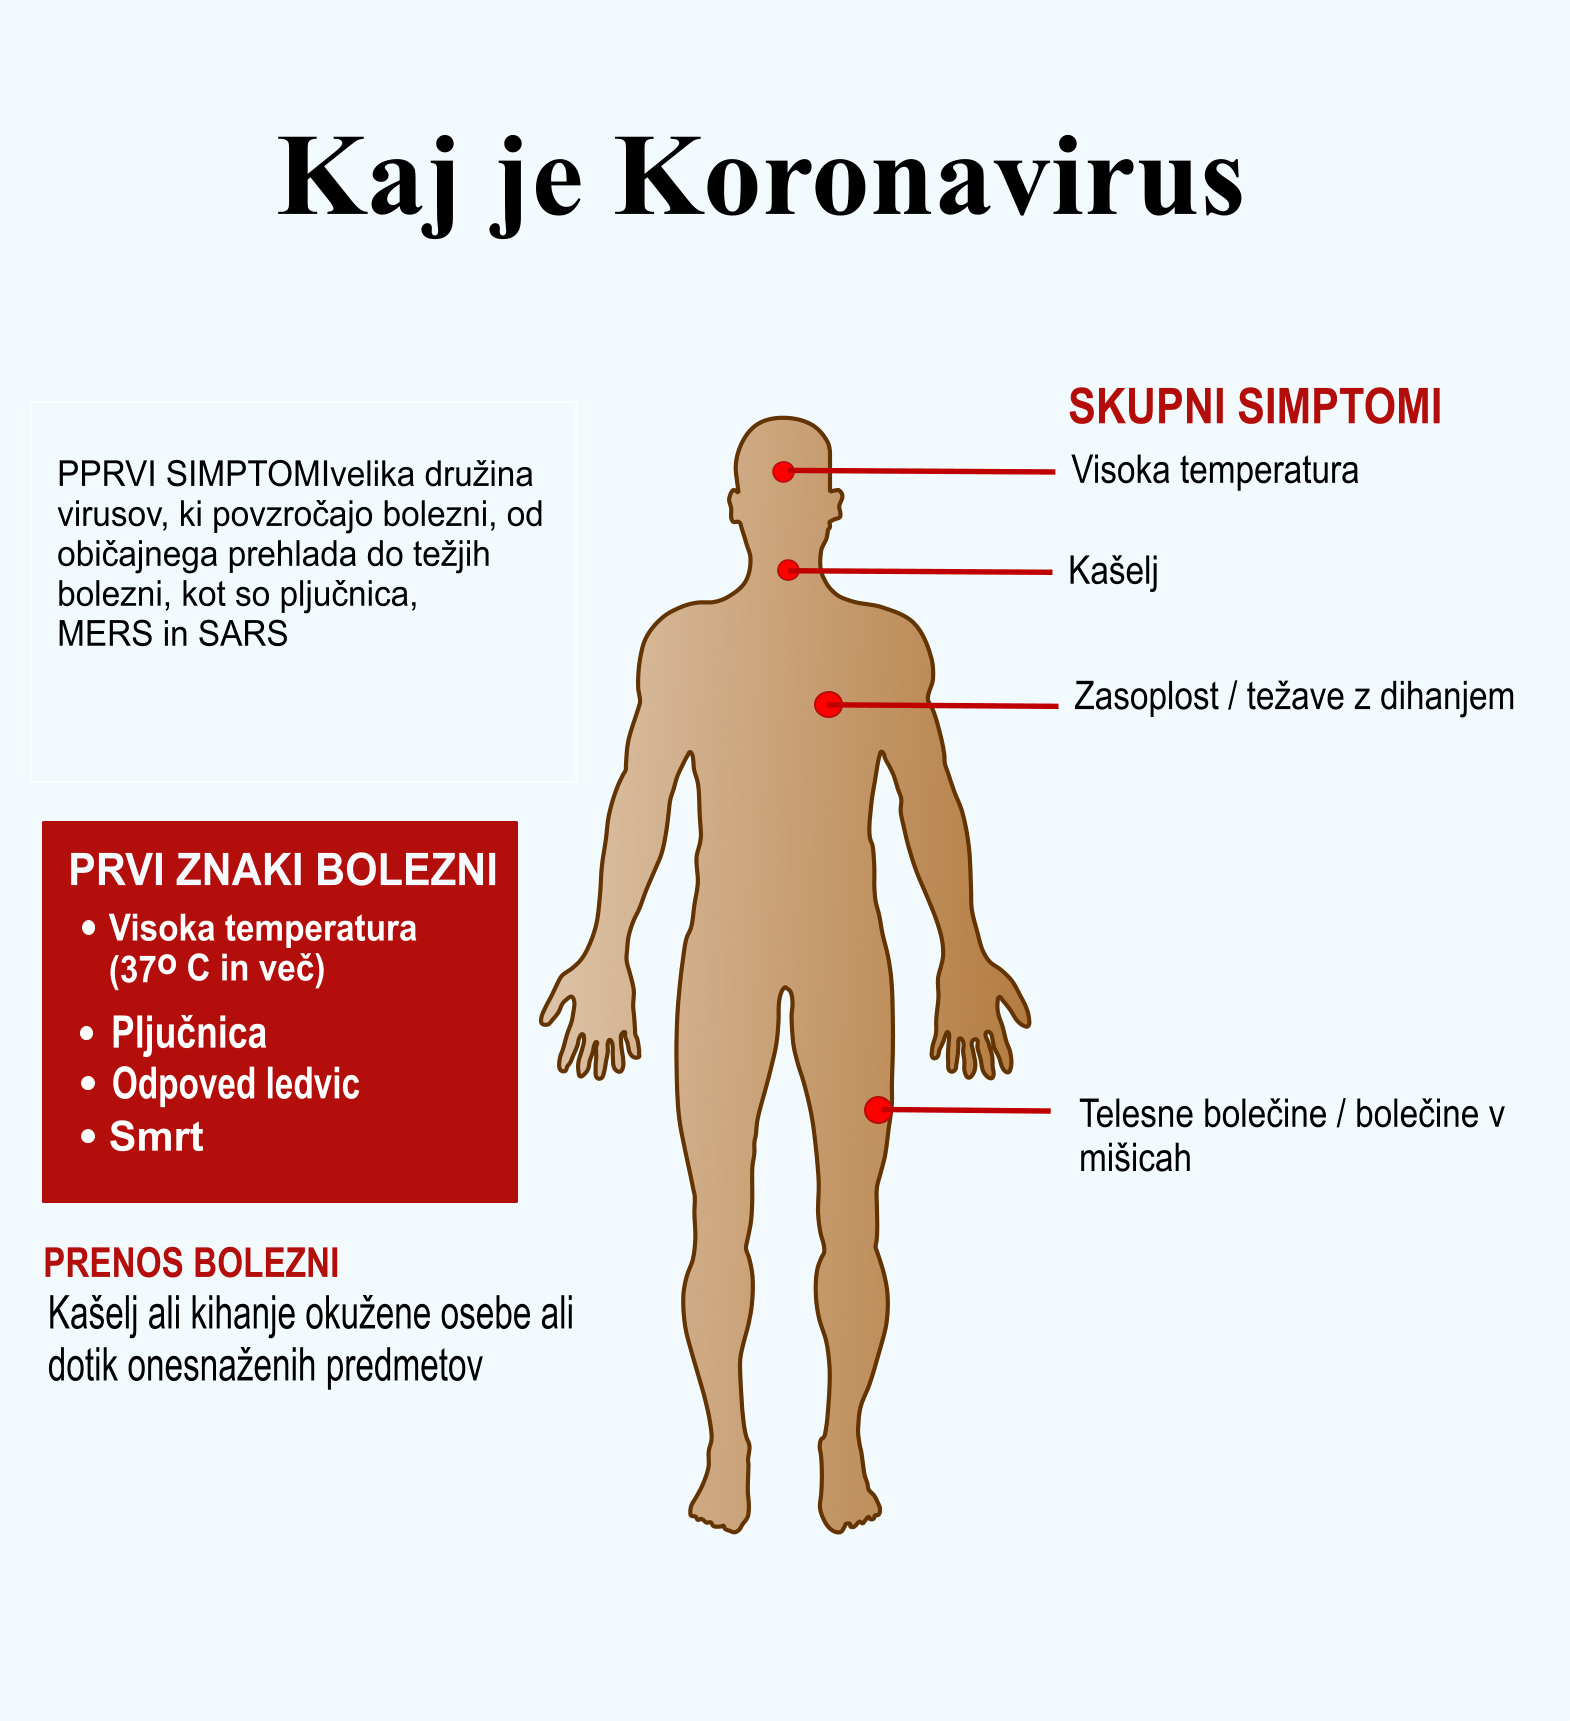 Kaj je Koronavirus